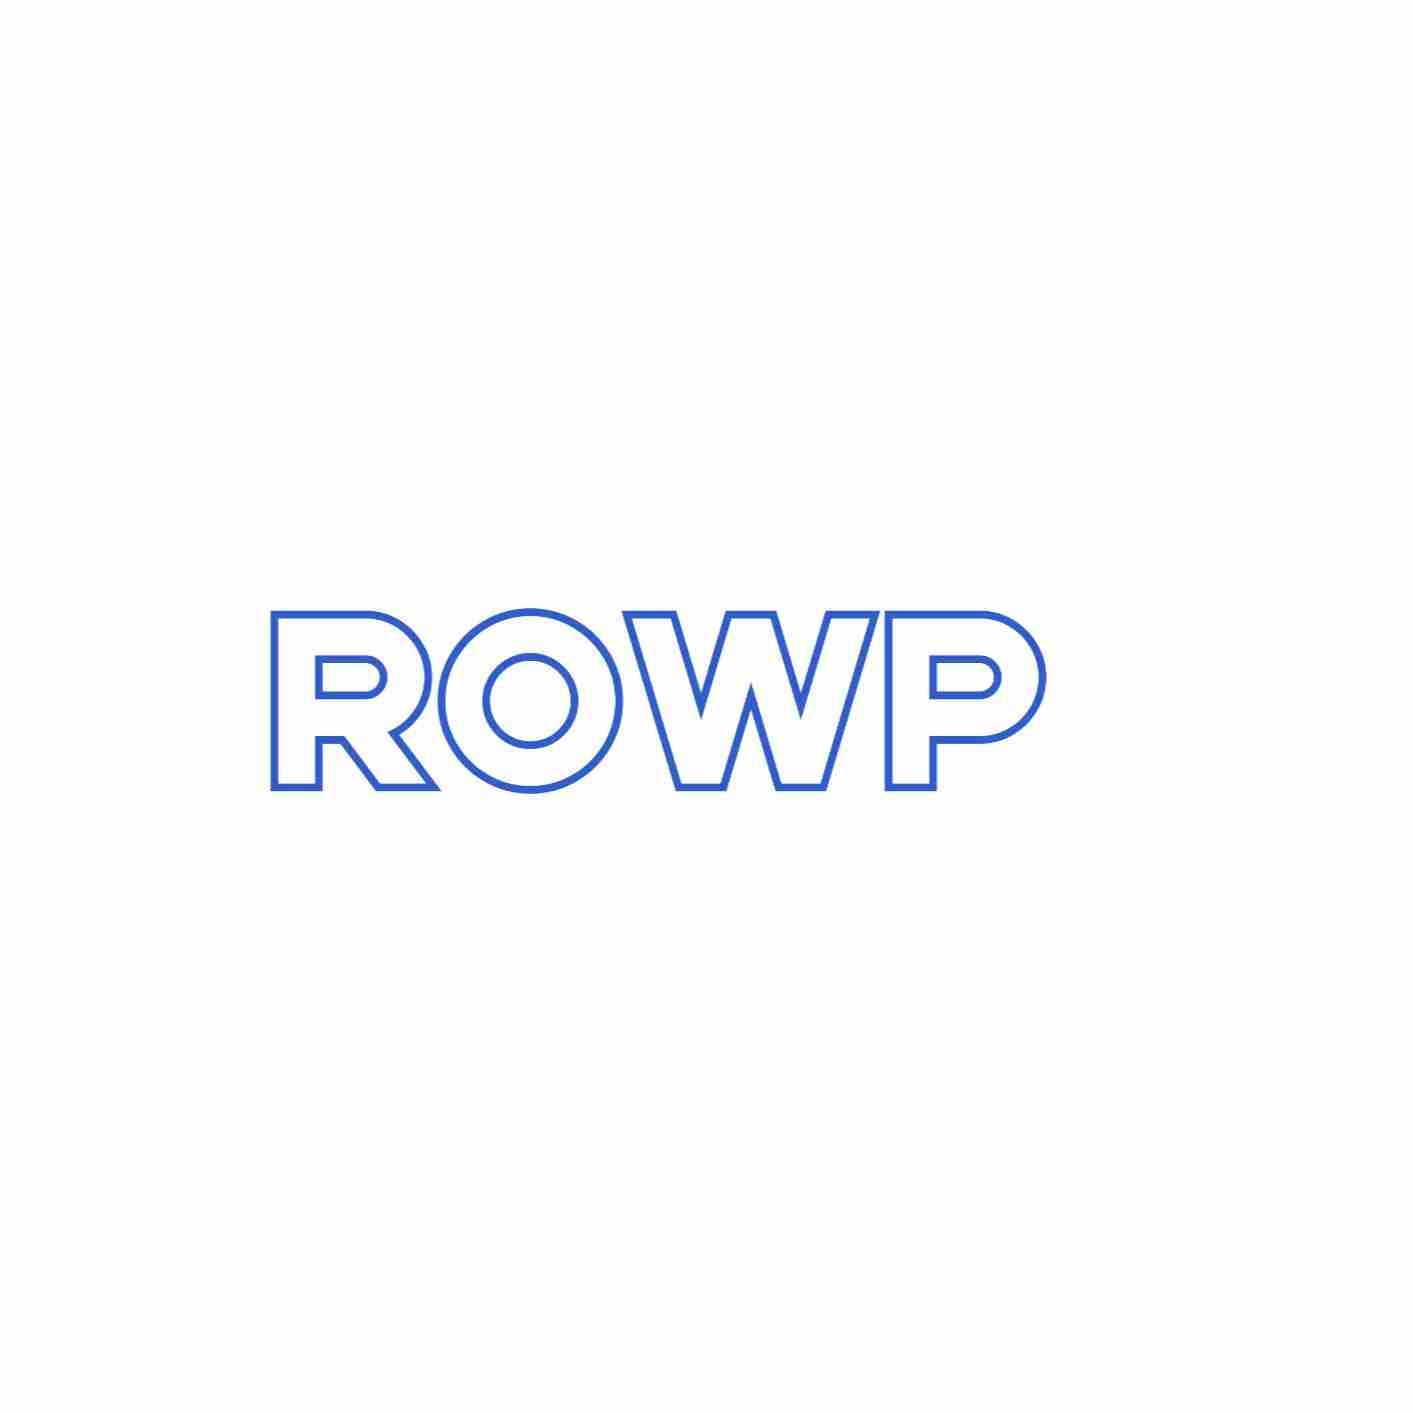 ROWP